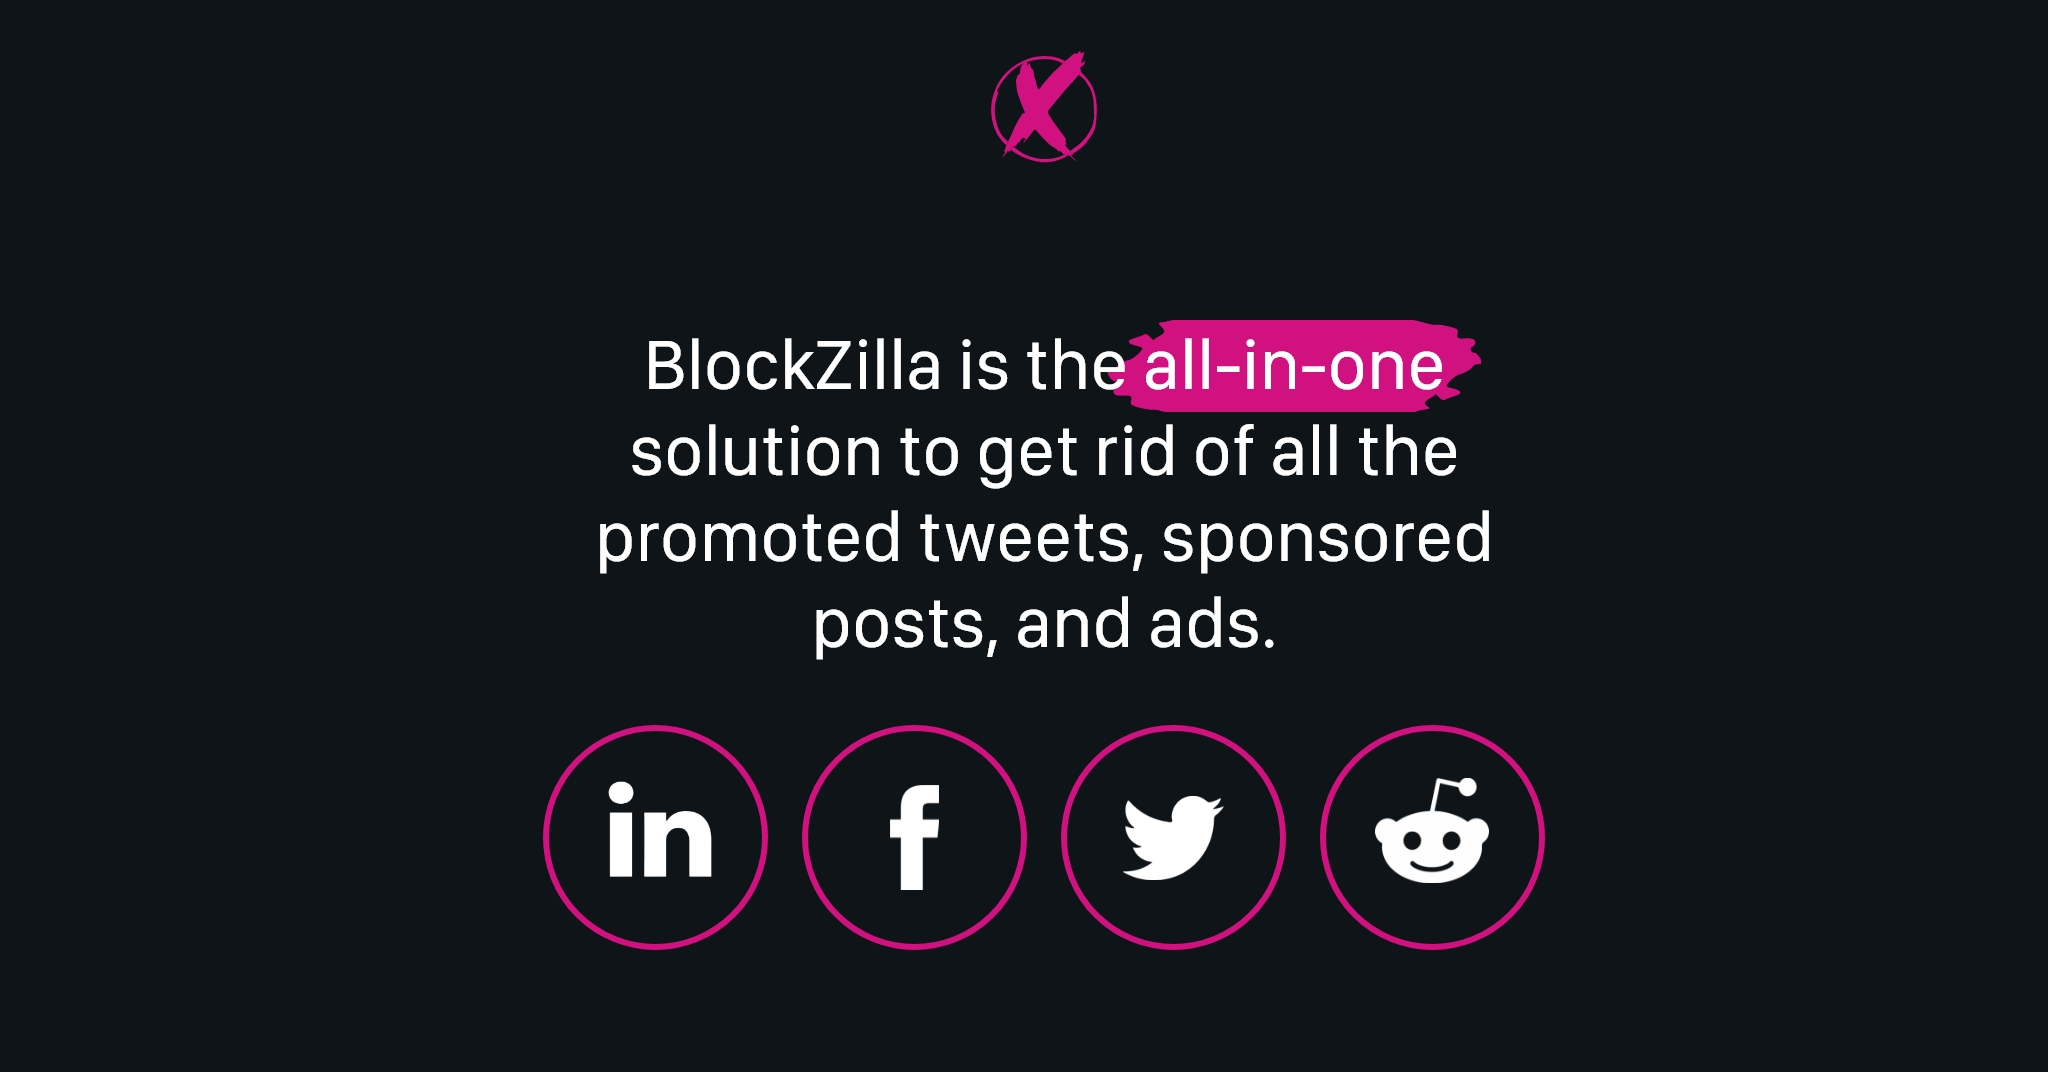 BlockZilla